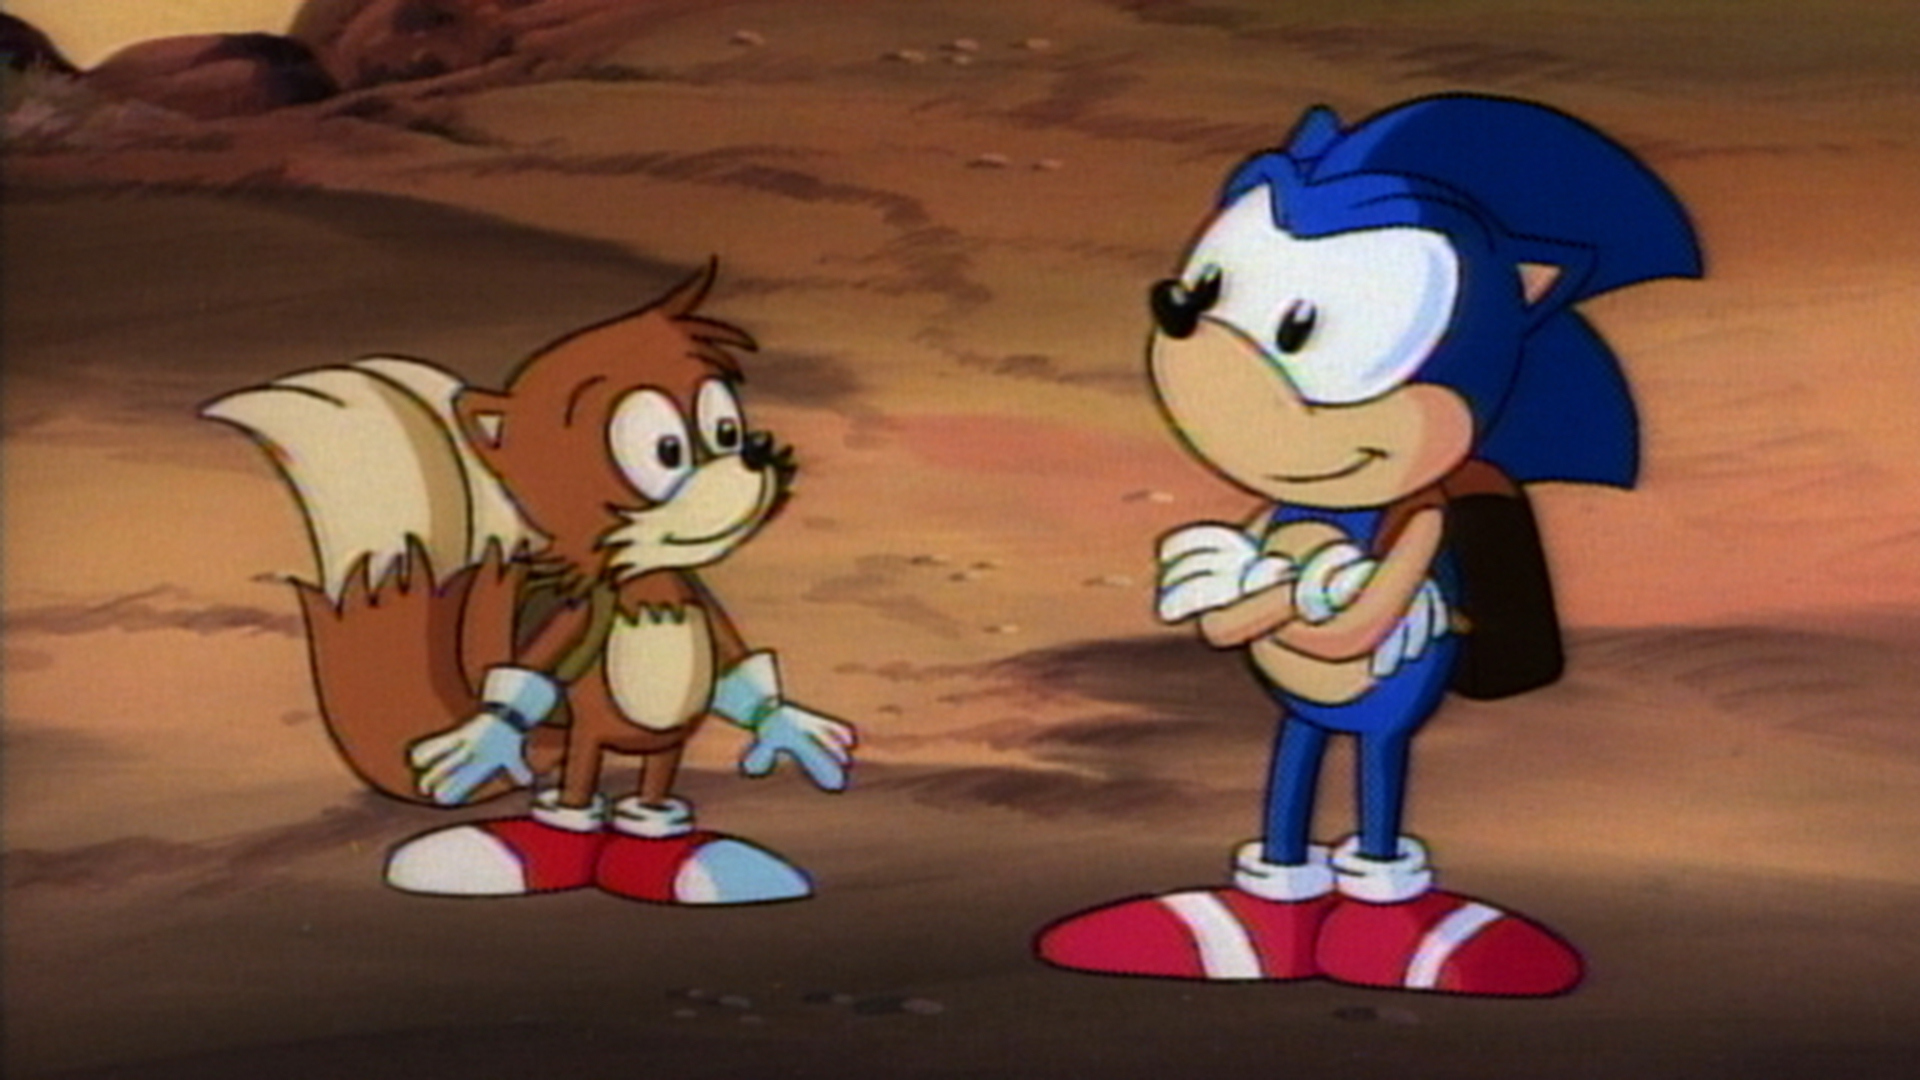 Sonic the Hedgehog Season 2 - watch episodes streaming online